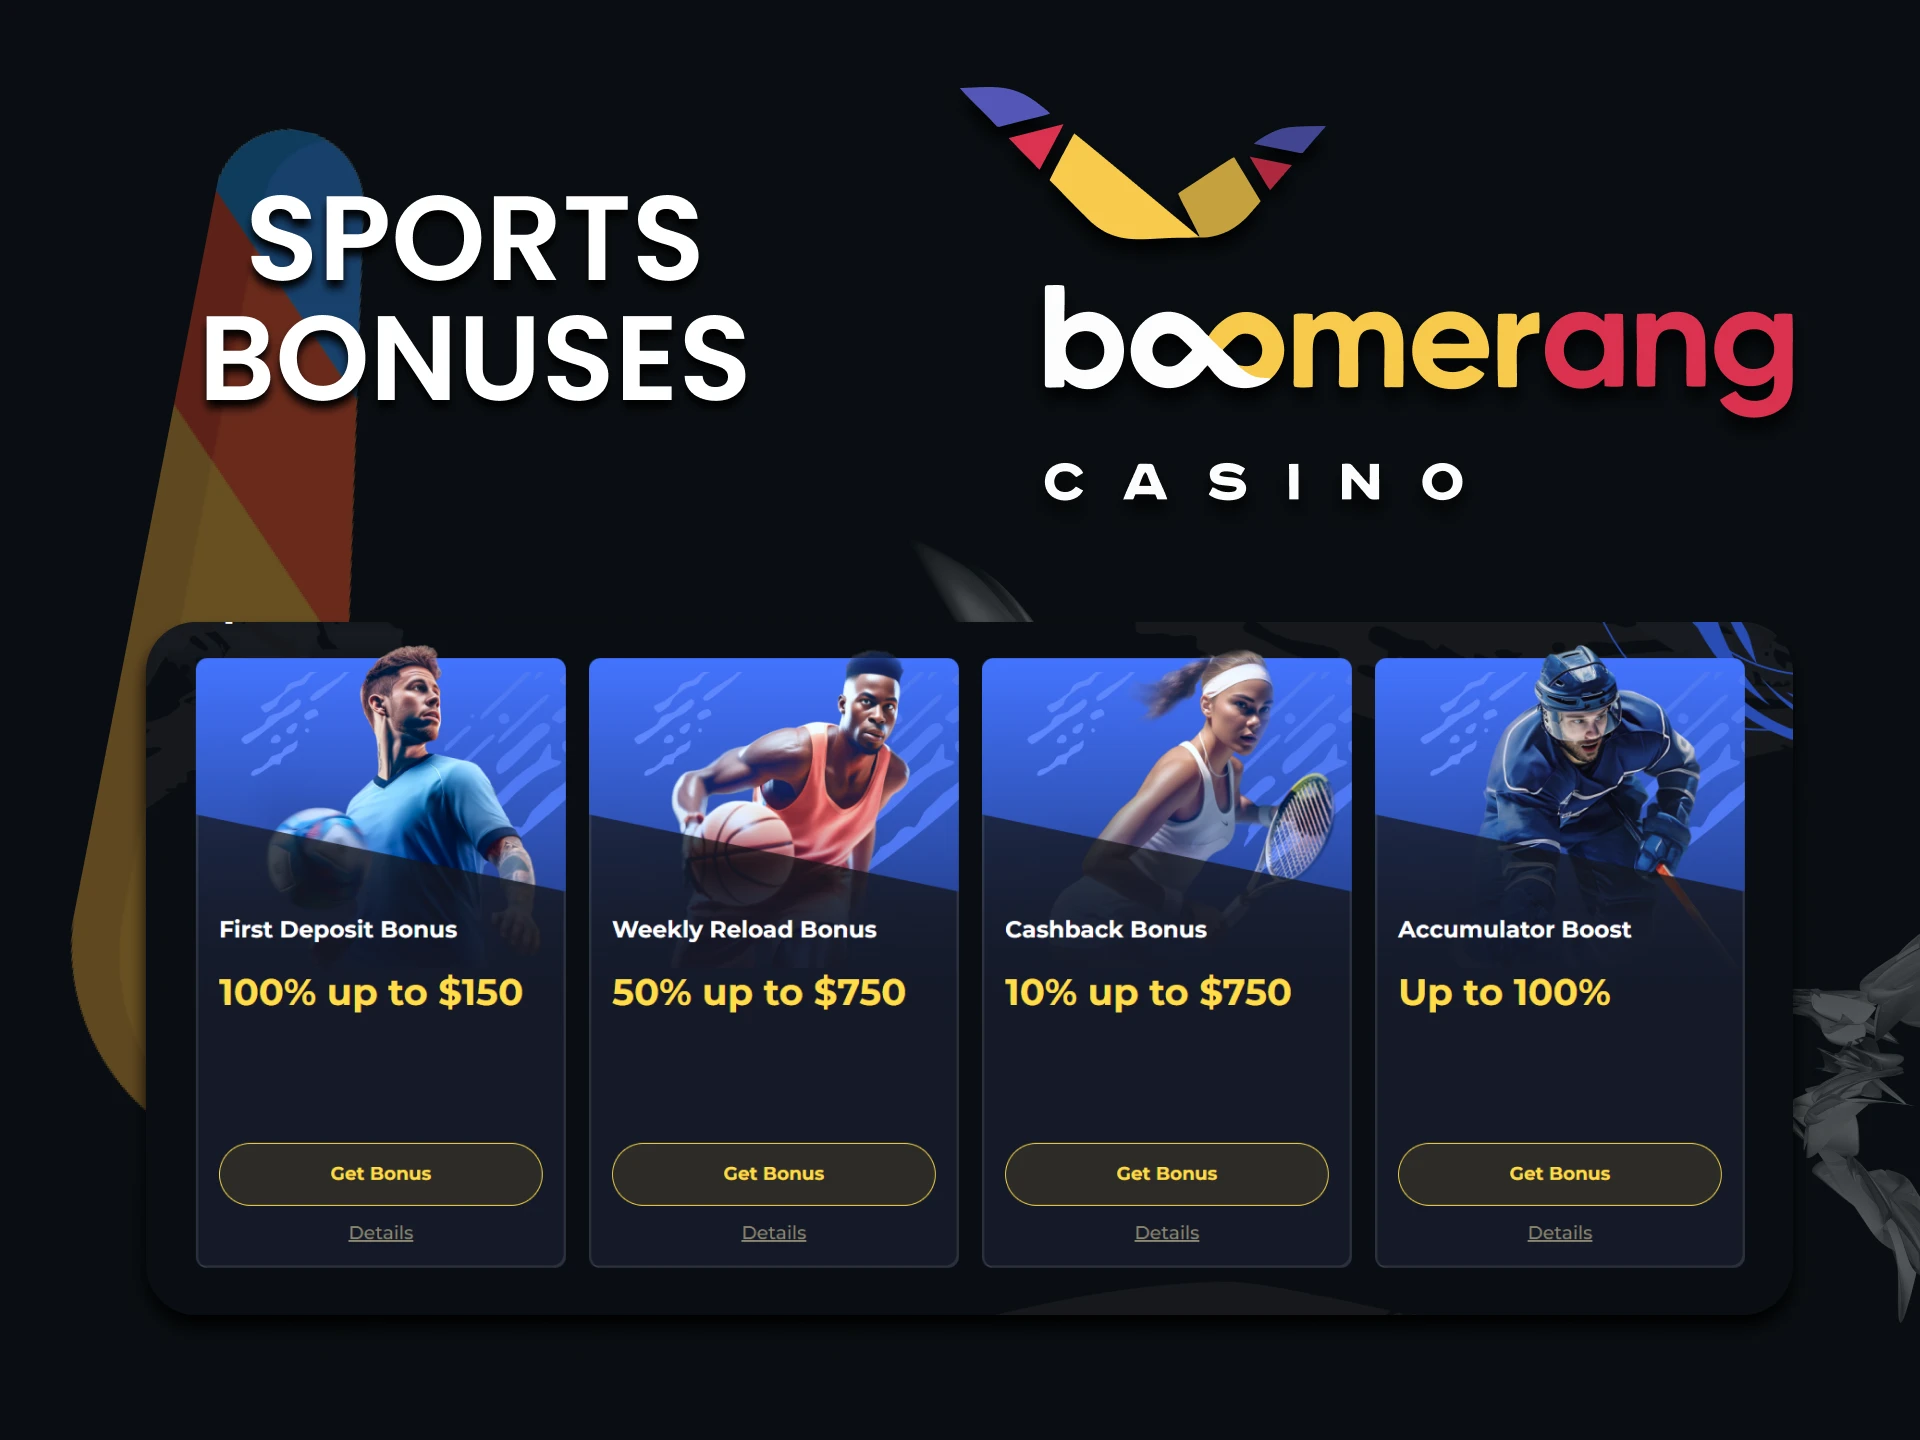 Get a sports betting bonus from Boomerang Casino.